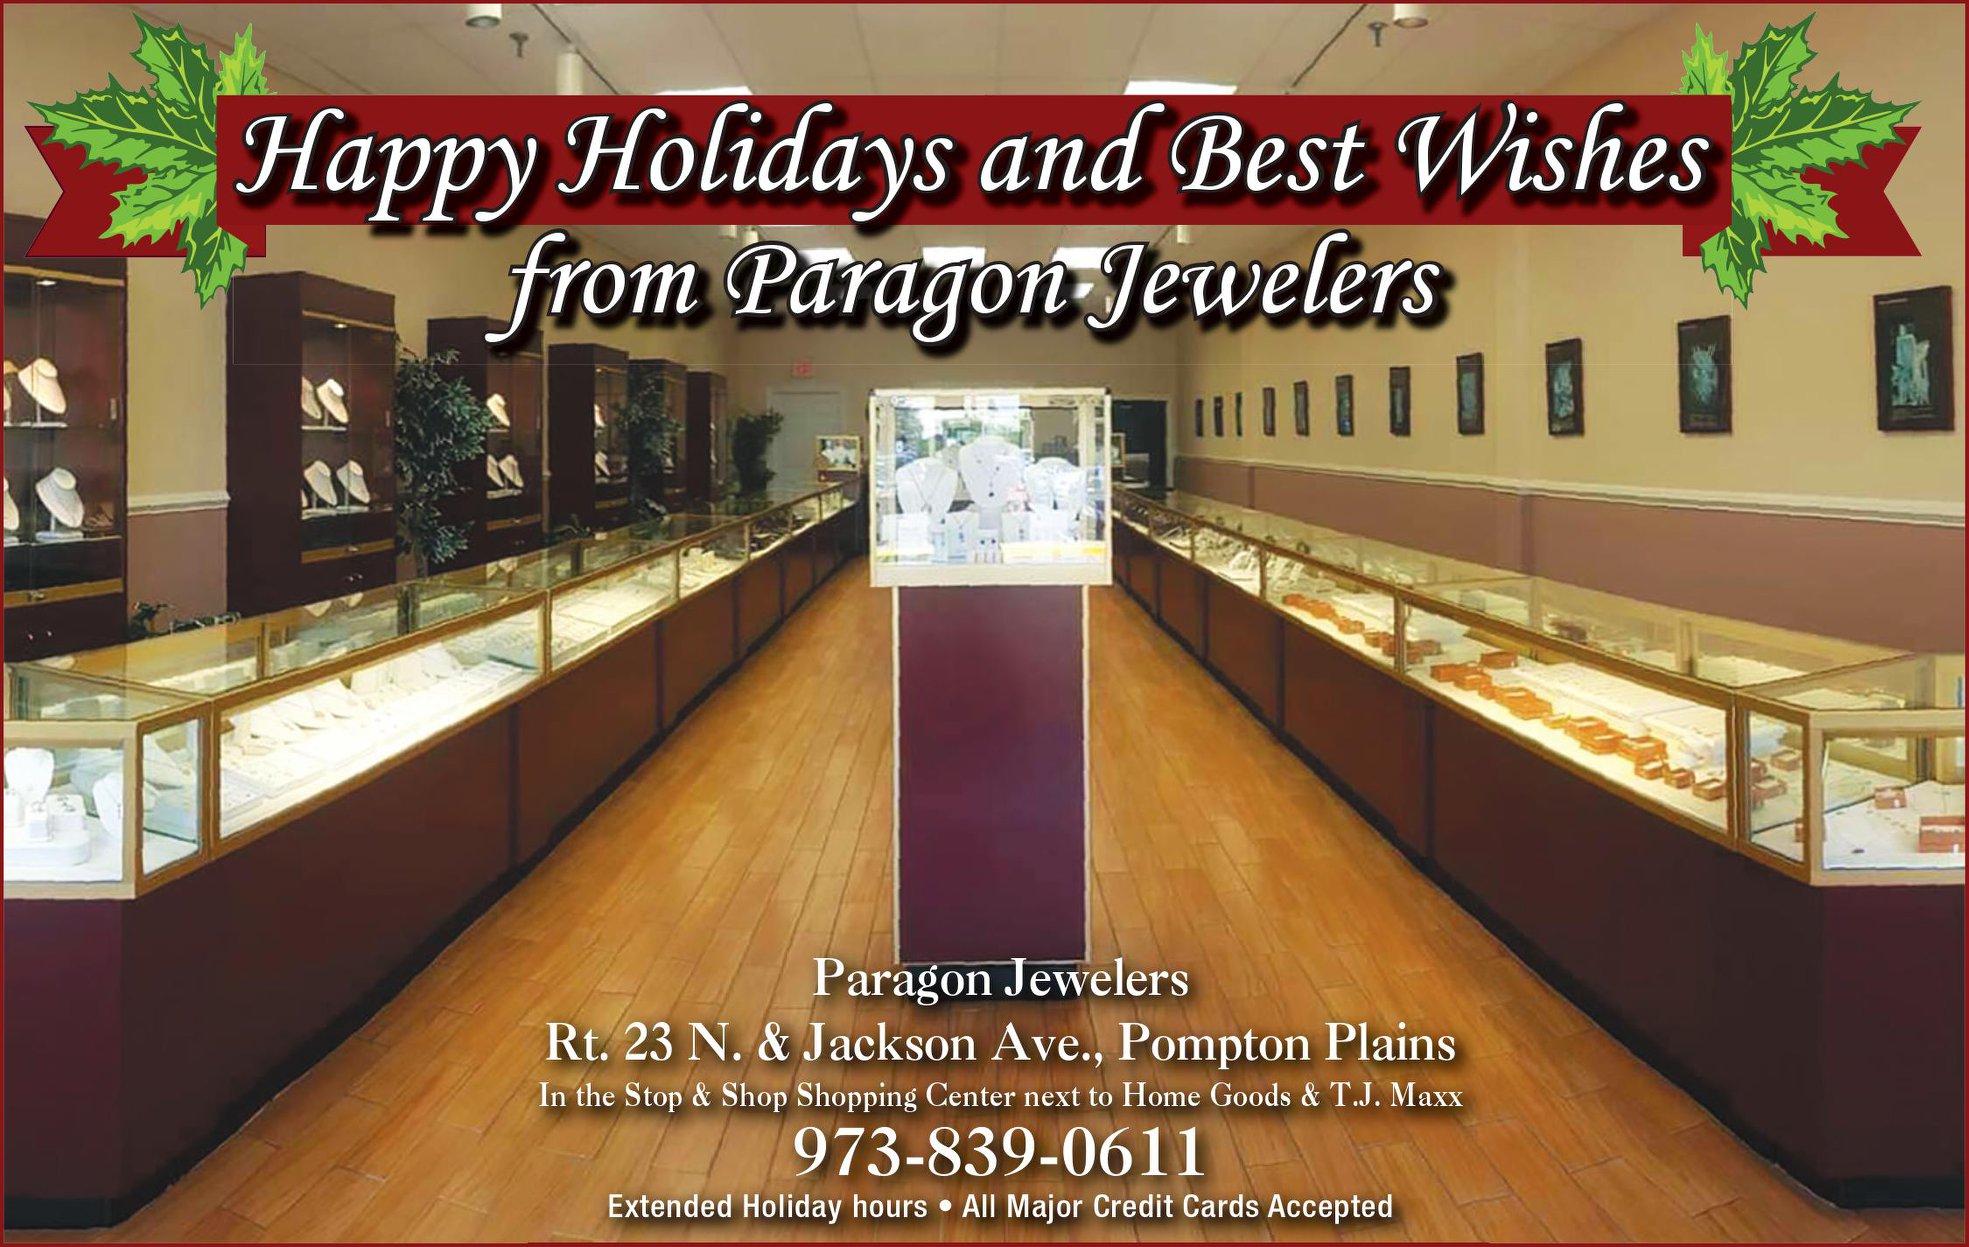 Paragon Jewelers